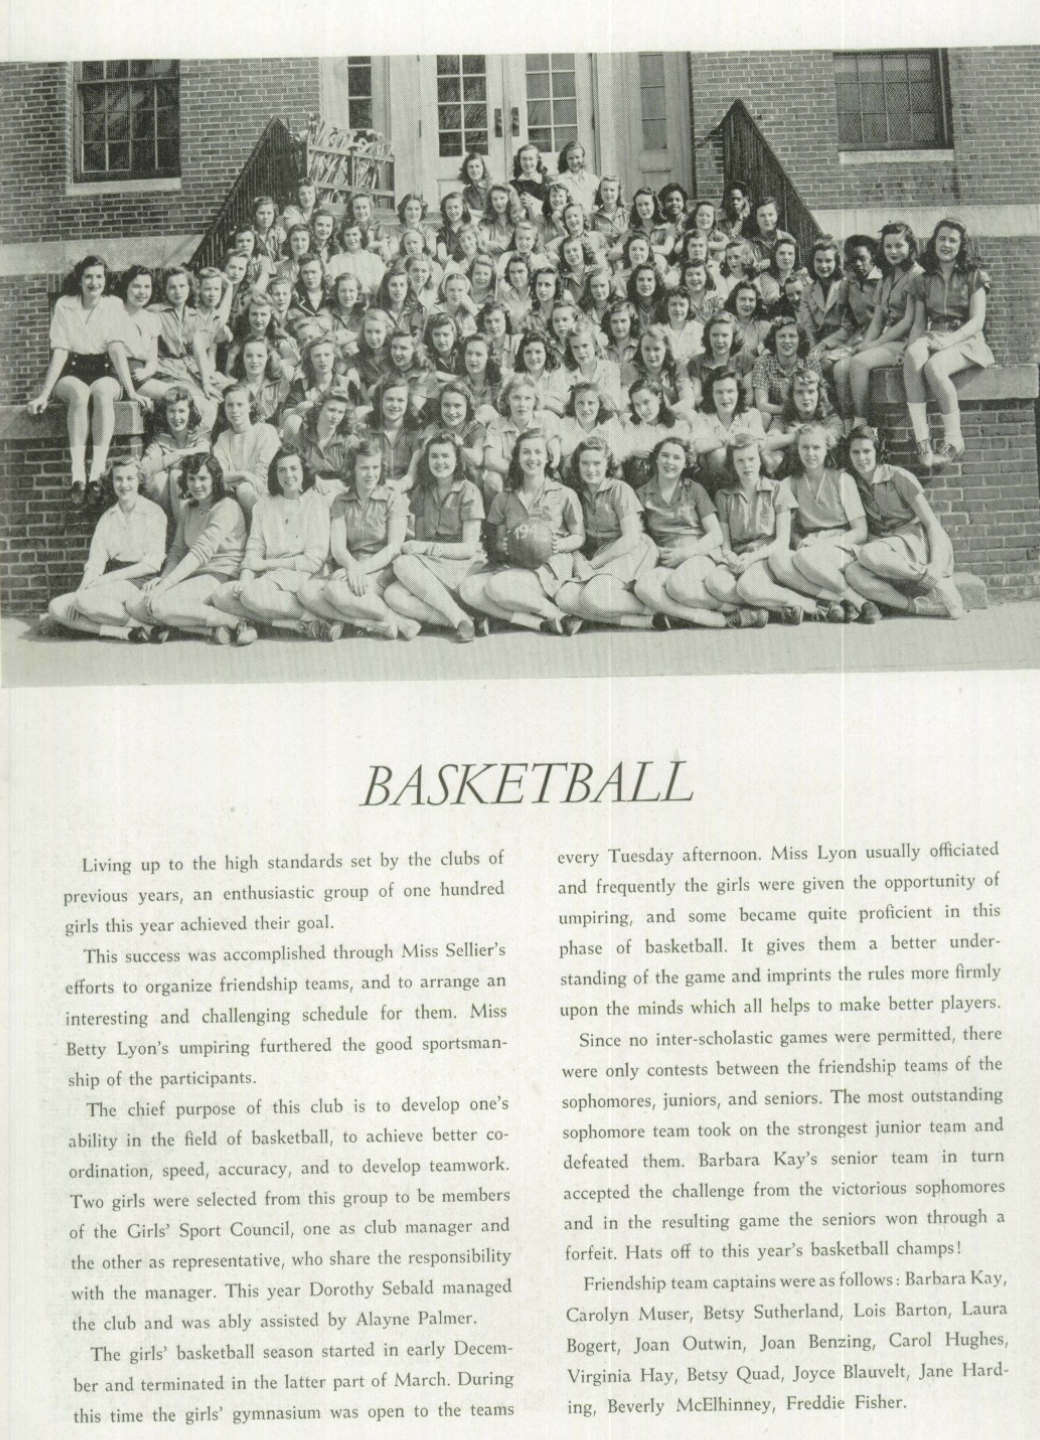 1946 Girls’ Basketball Team